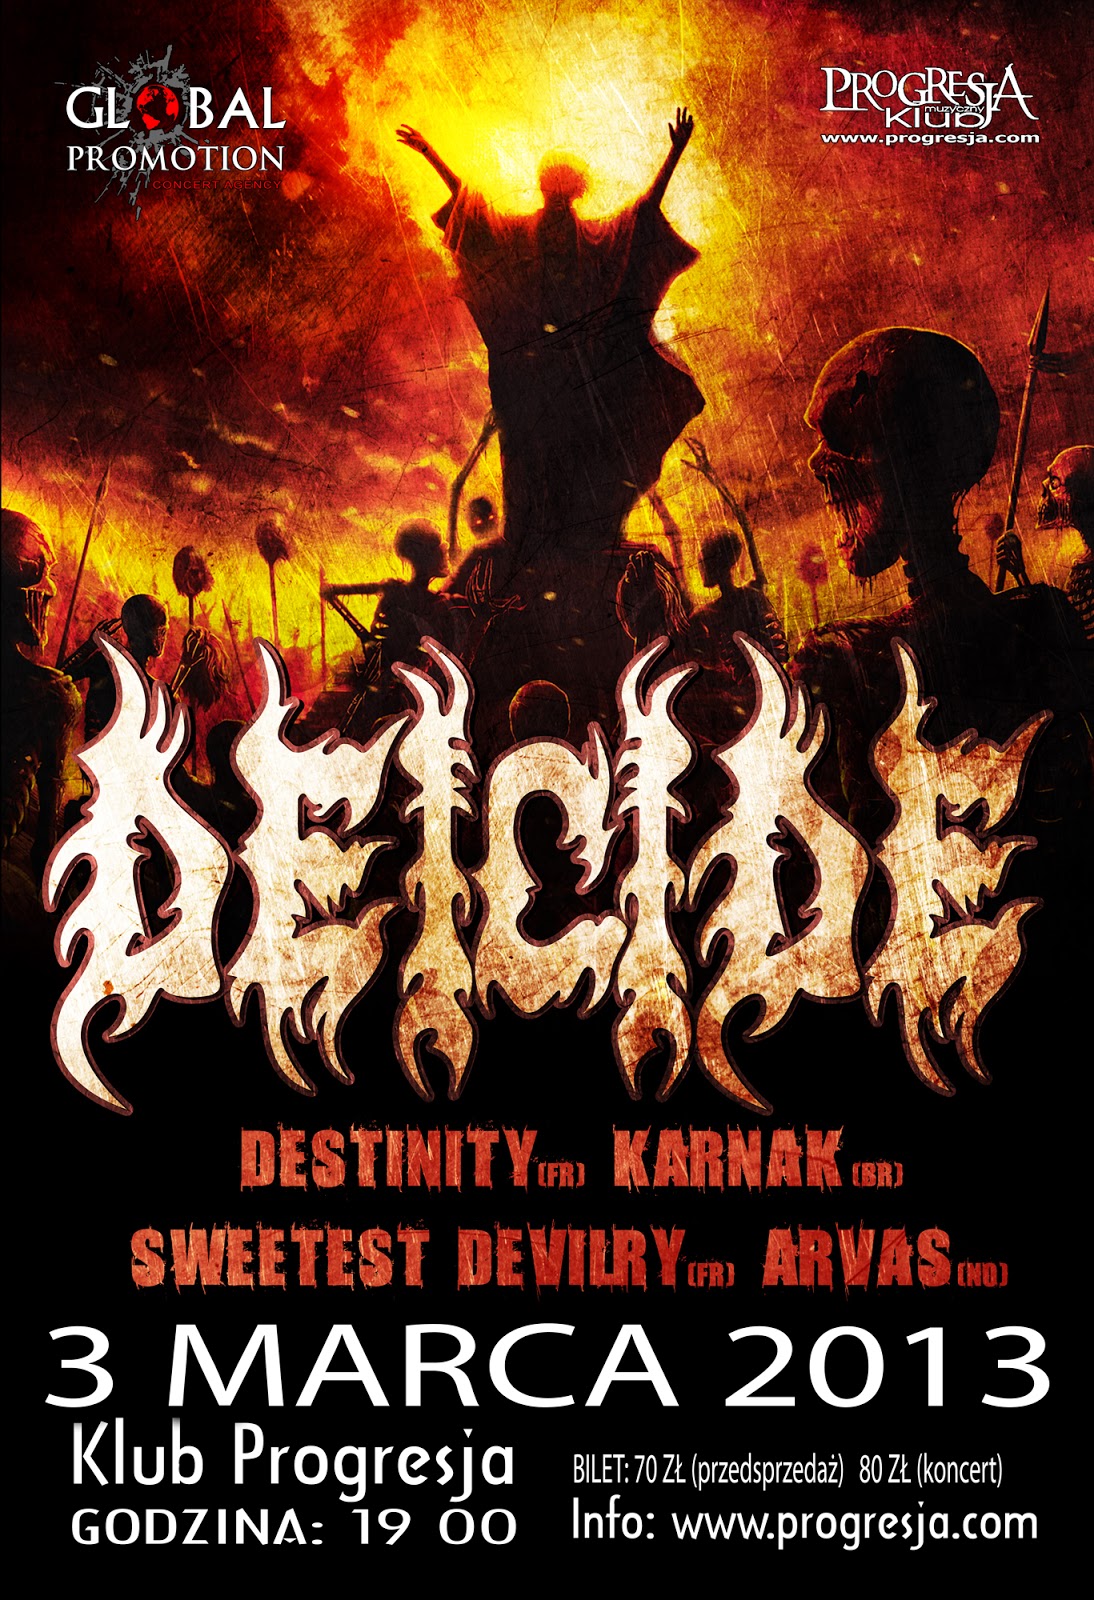 Deicide – ikona death metalu na scenie Progresji!